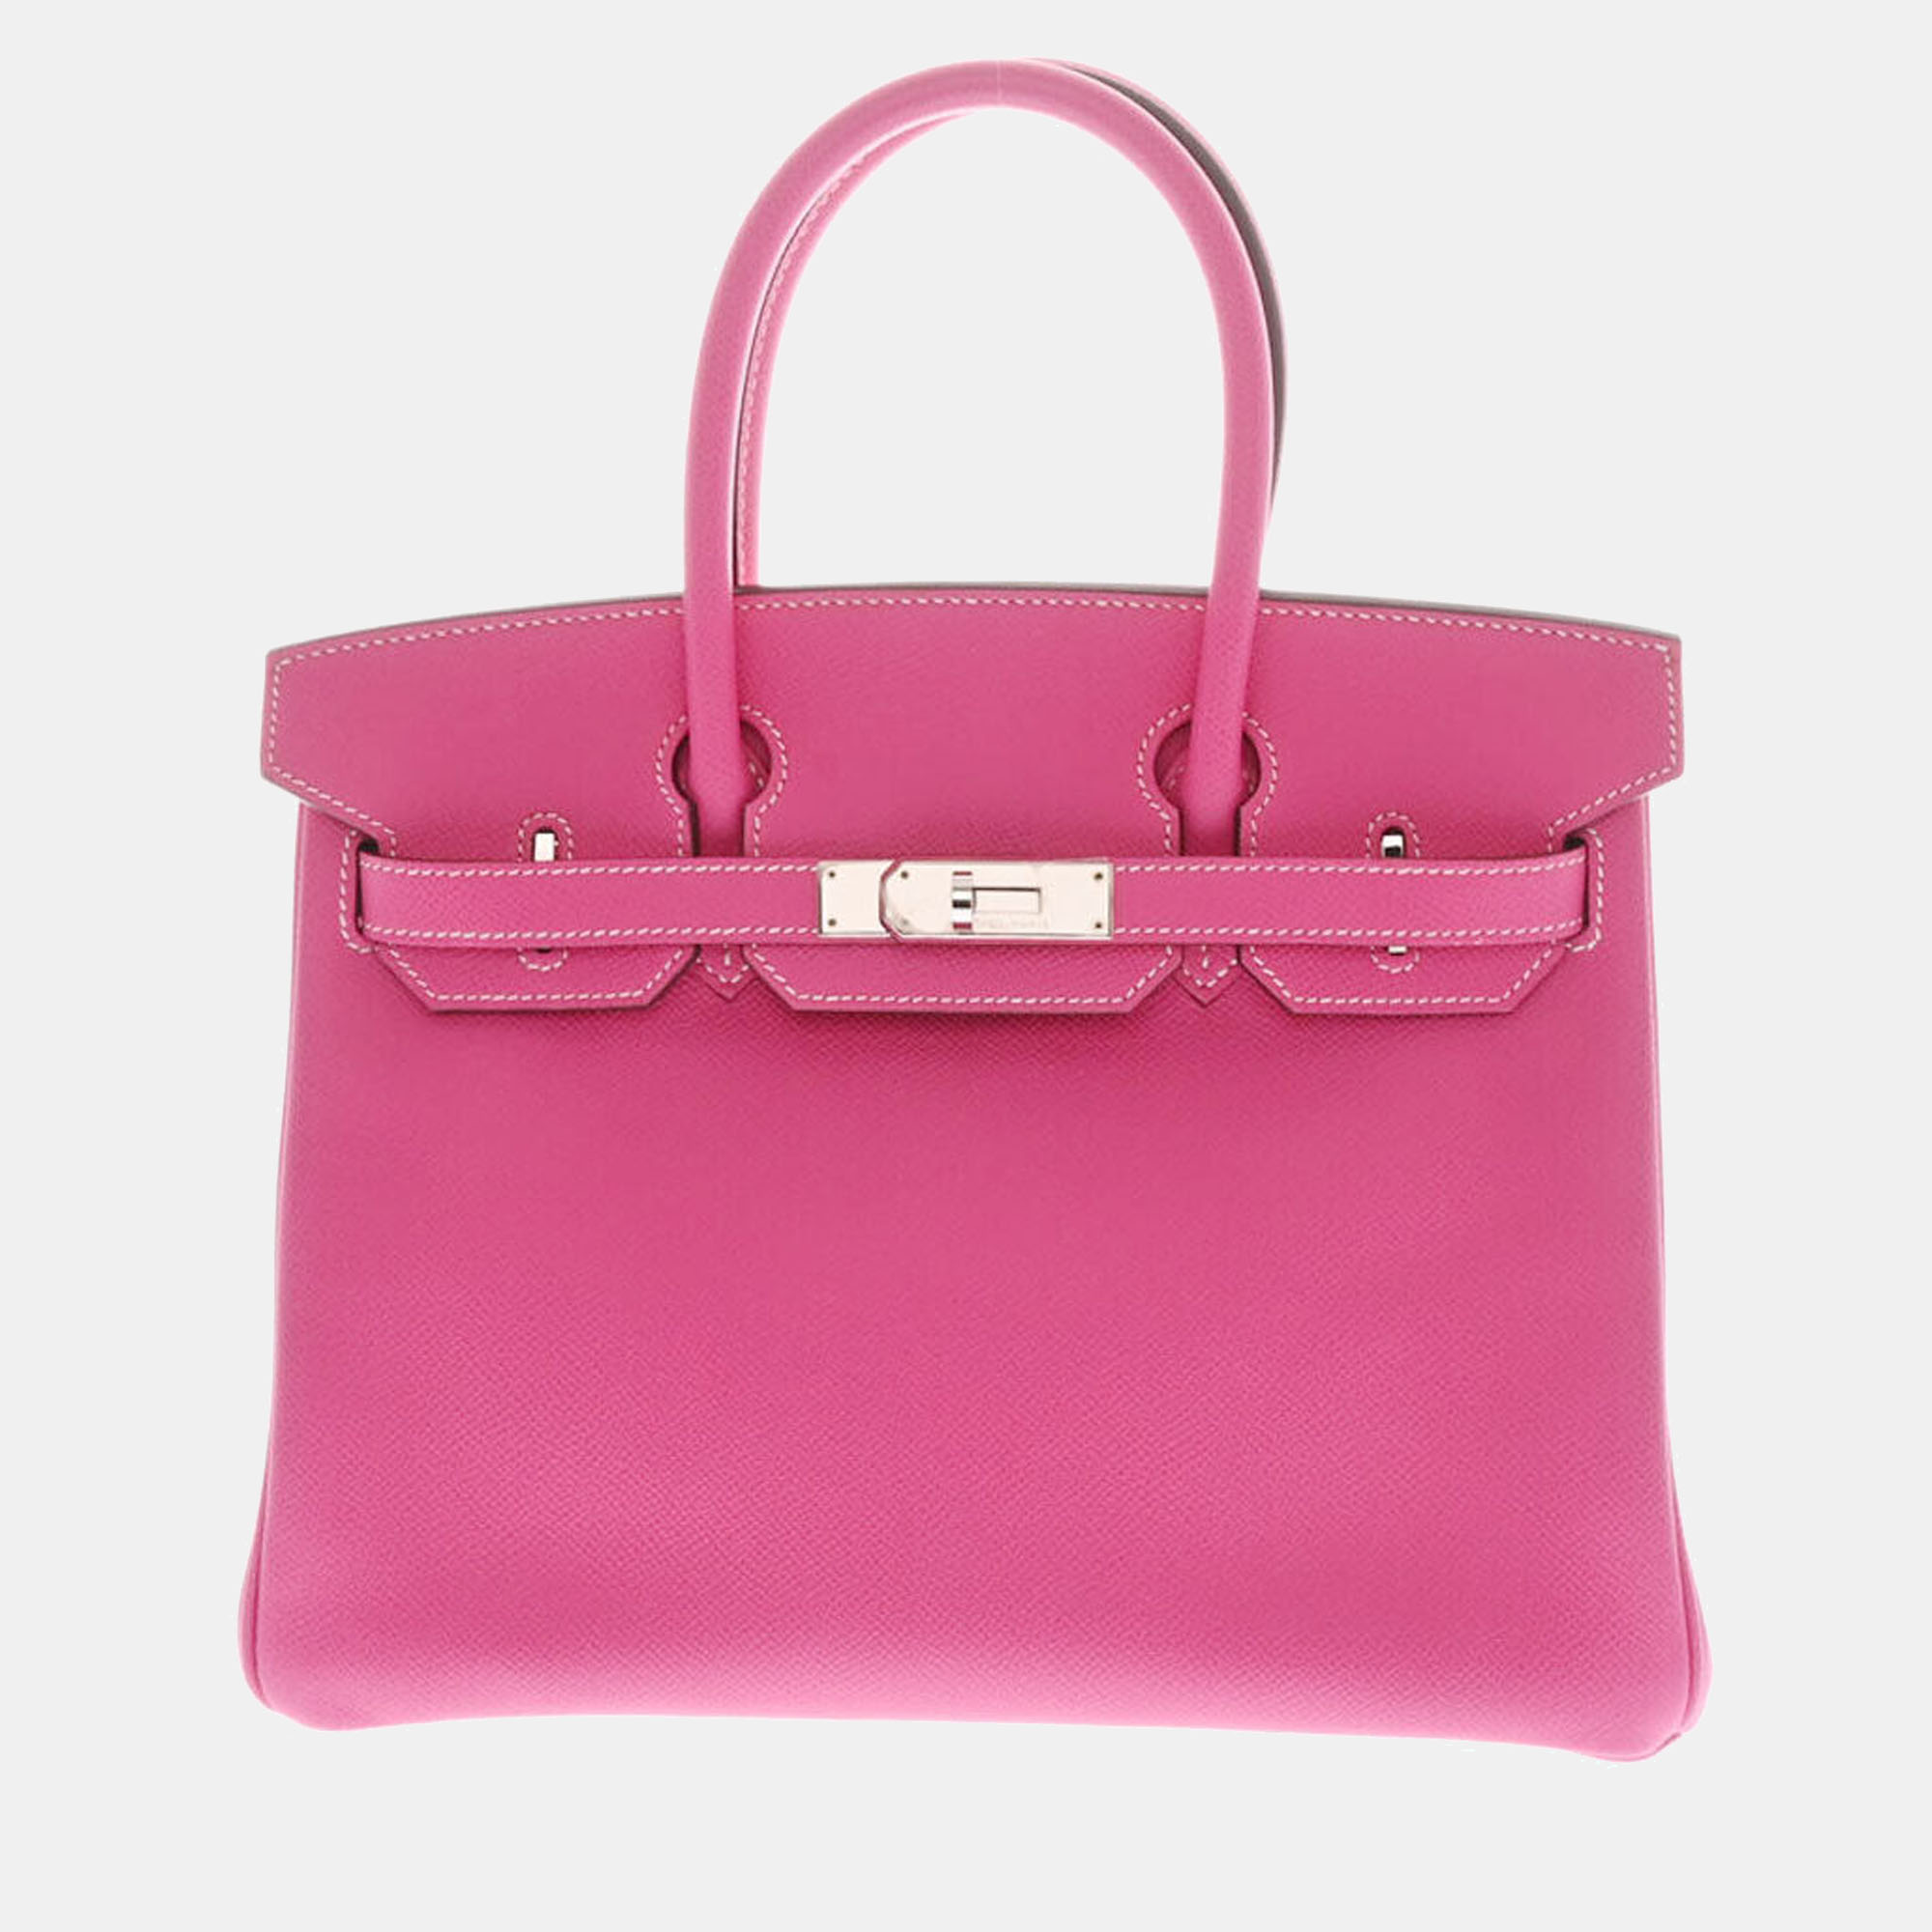 Hermes Pink Epsom Leather Palladium Hardware Birkin 30 Bag